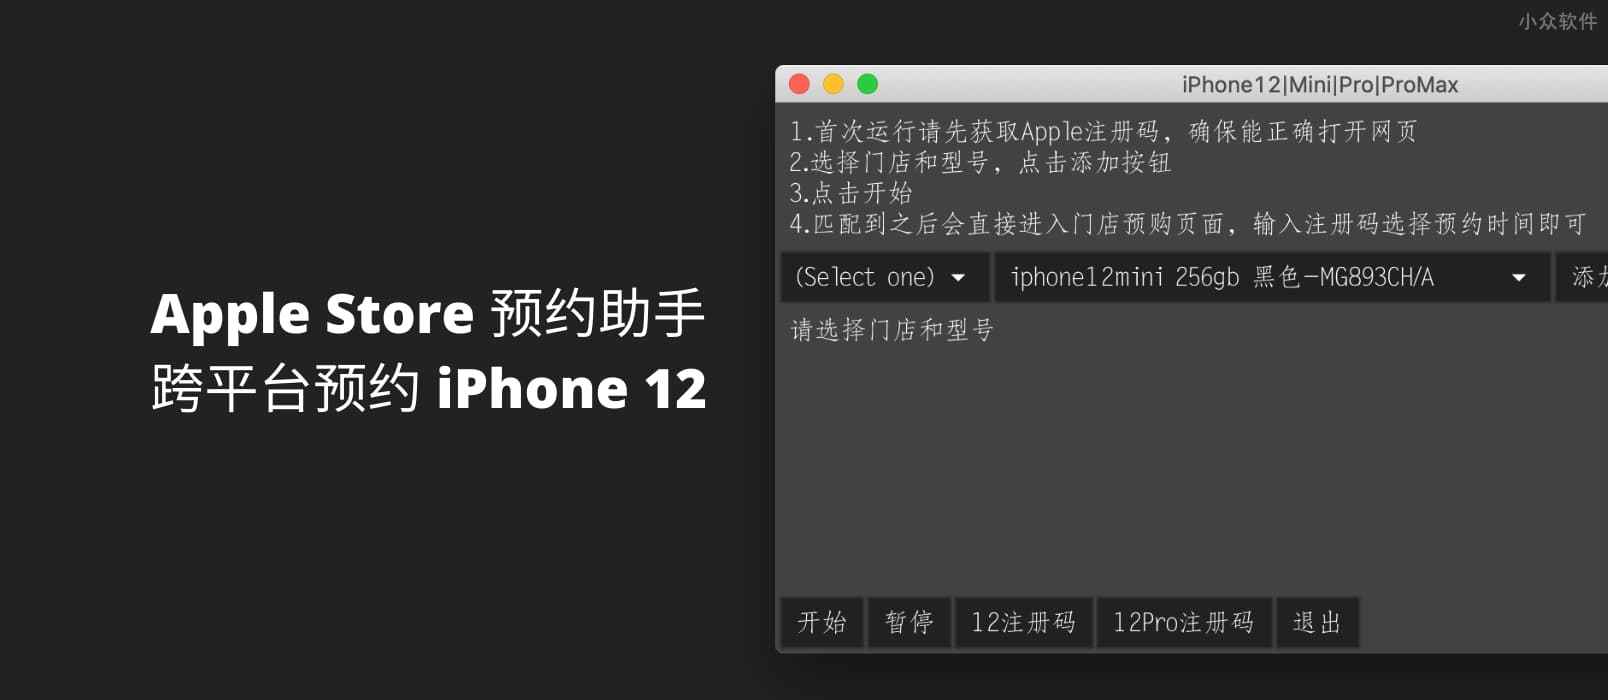 Apple Store 预约助手 – 跨平台提醒预约 iPhone 12 系列手机